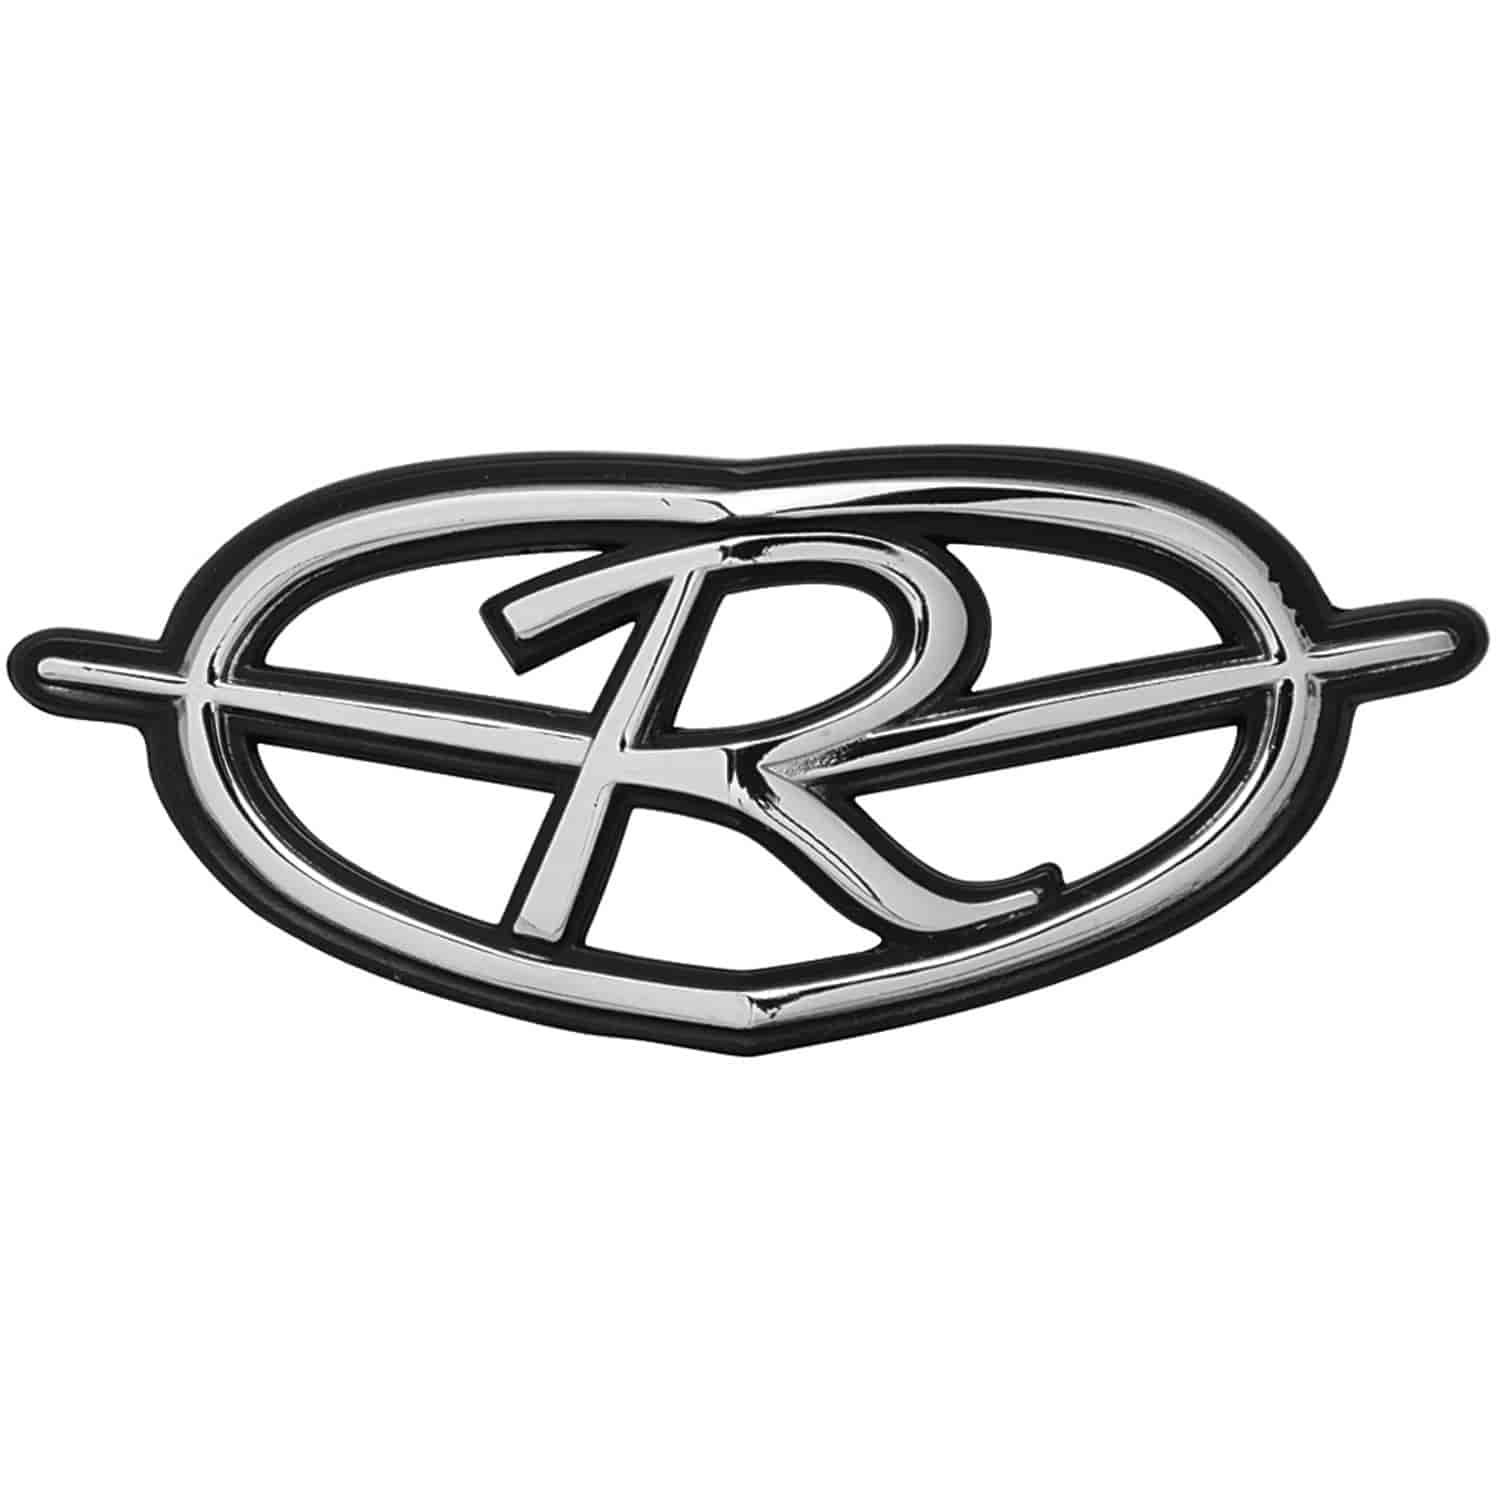 Emblem Grille 1973 Riviera